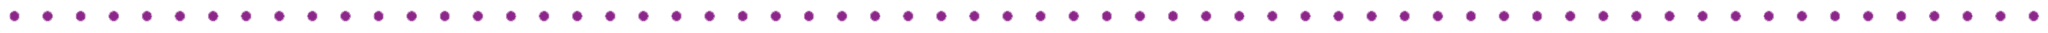 Divider Horizontal purple dots